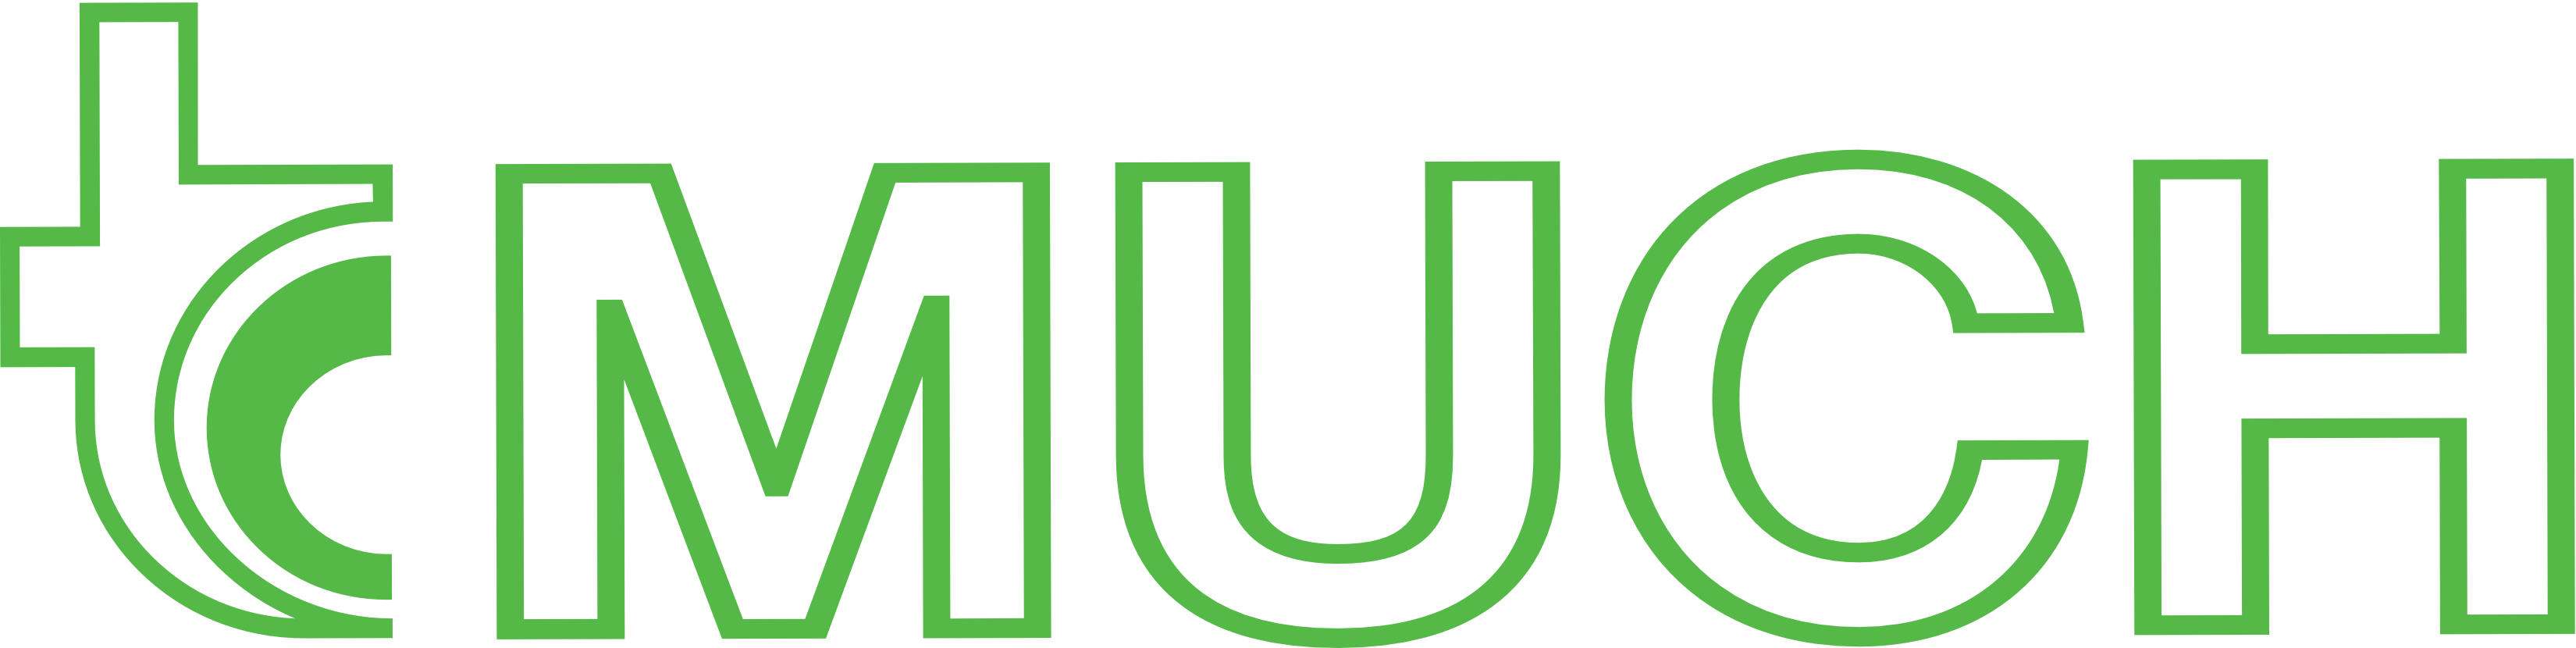 tcmuch Logo